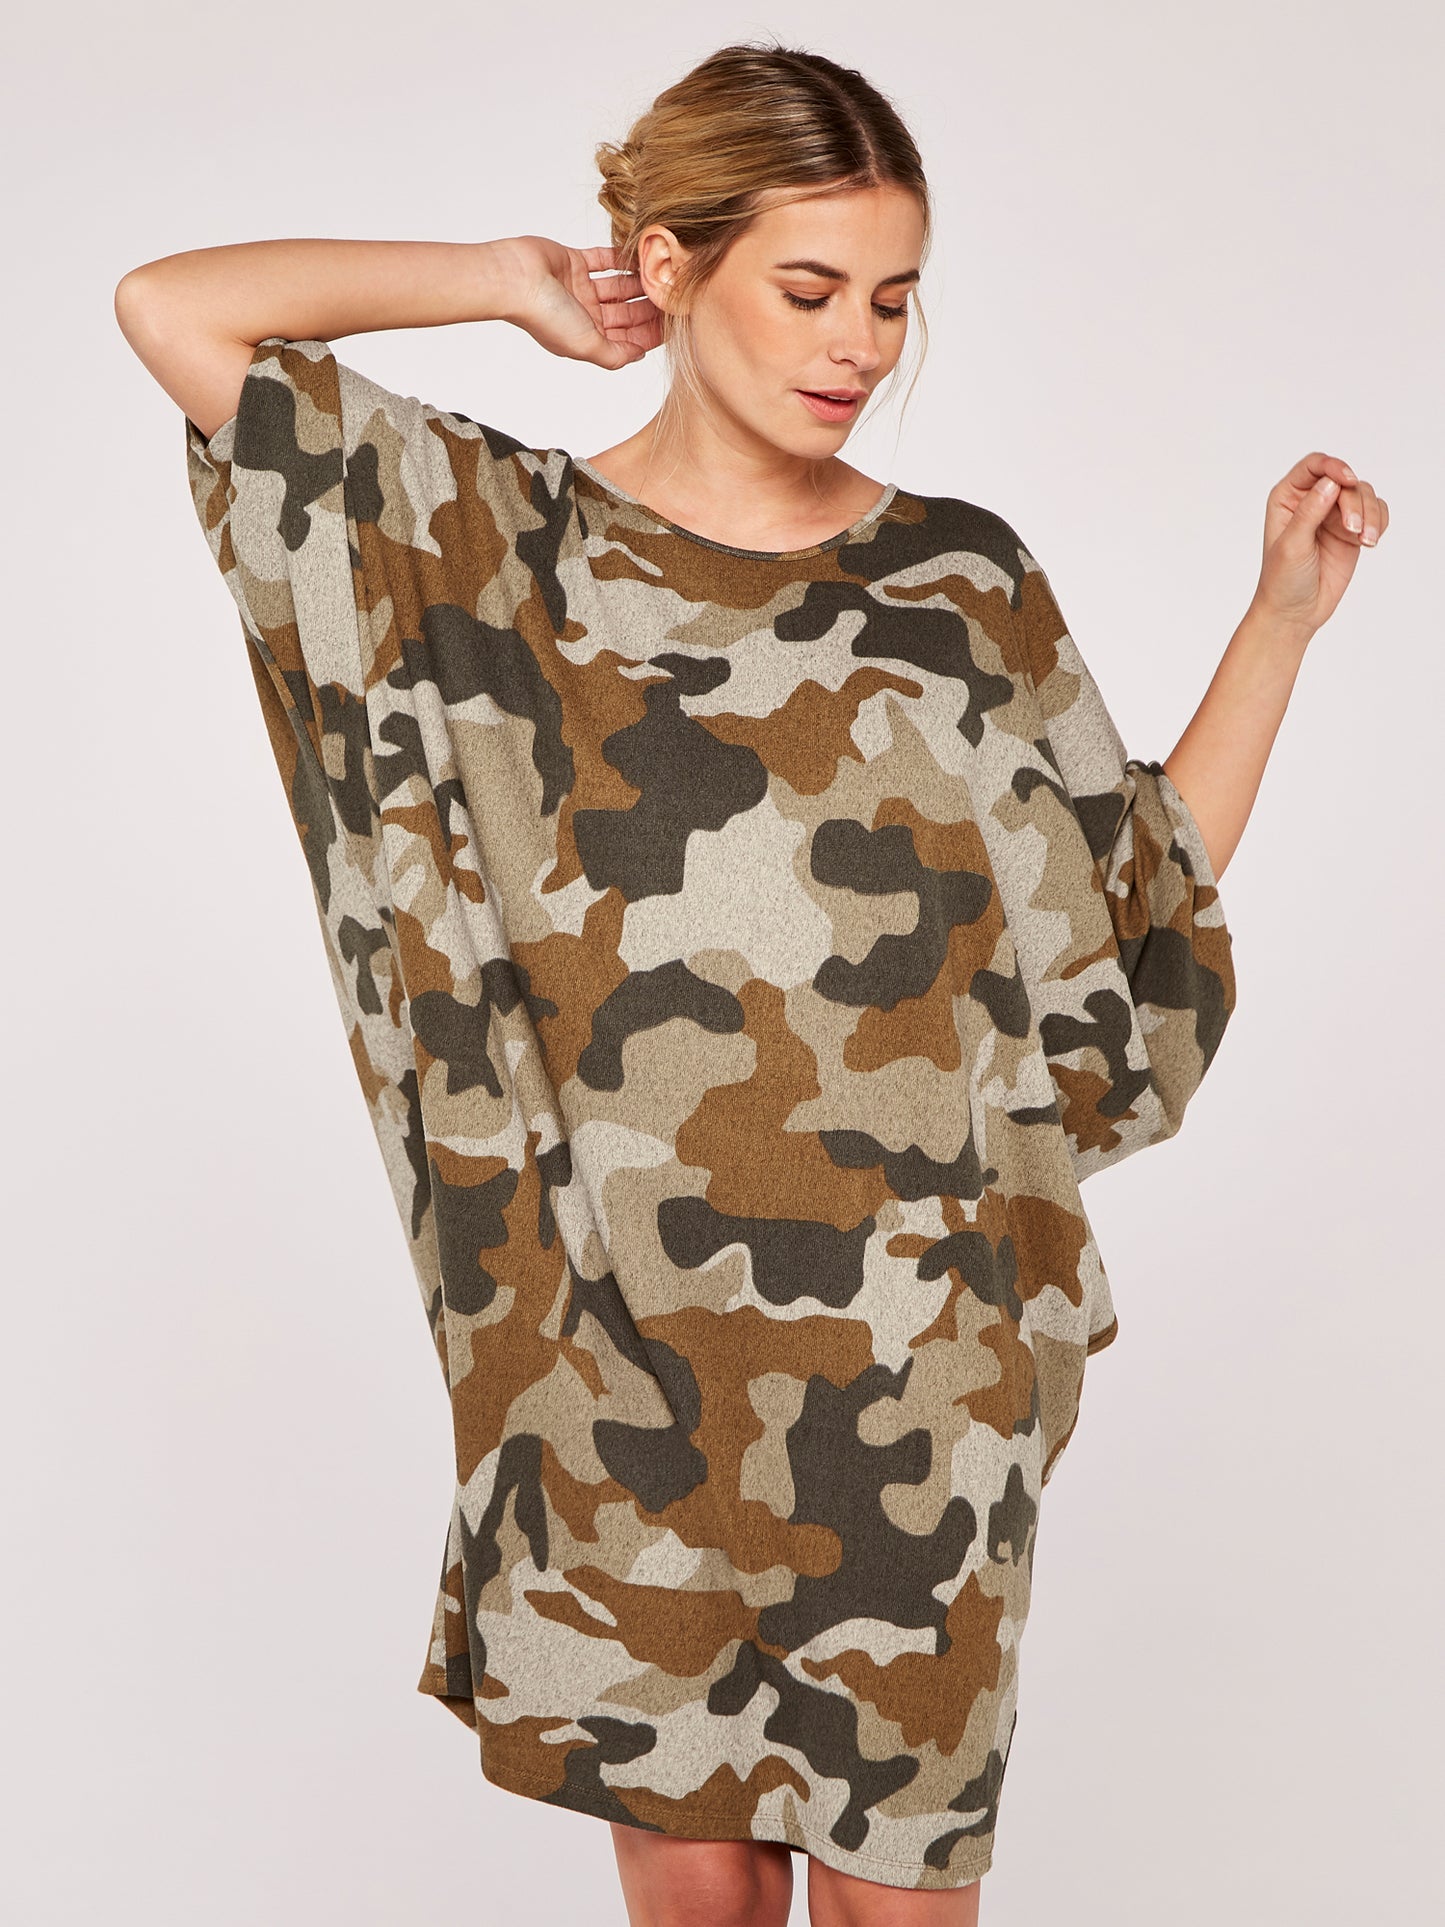 Apricot - Camouflage Dress